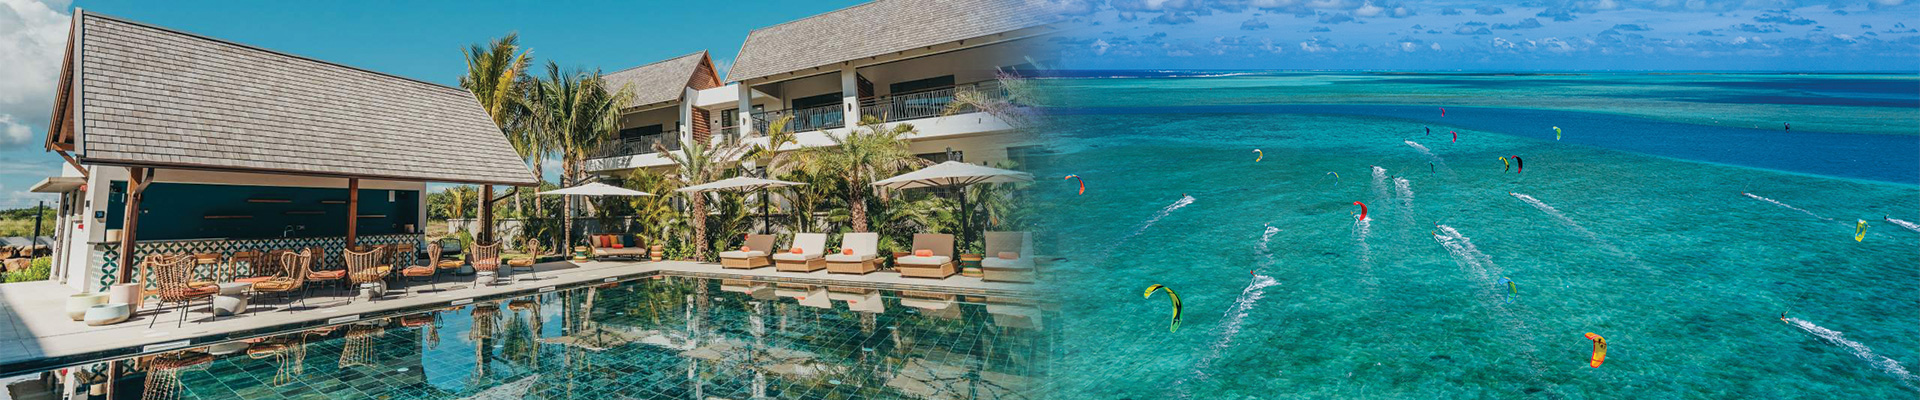 Domaine De Grand Baie & 3* Plus C Rodrigues Mourouk Hotel - Rodrigues Package (7 nights)